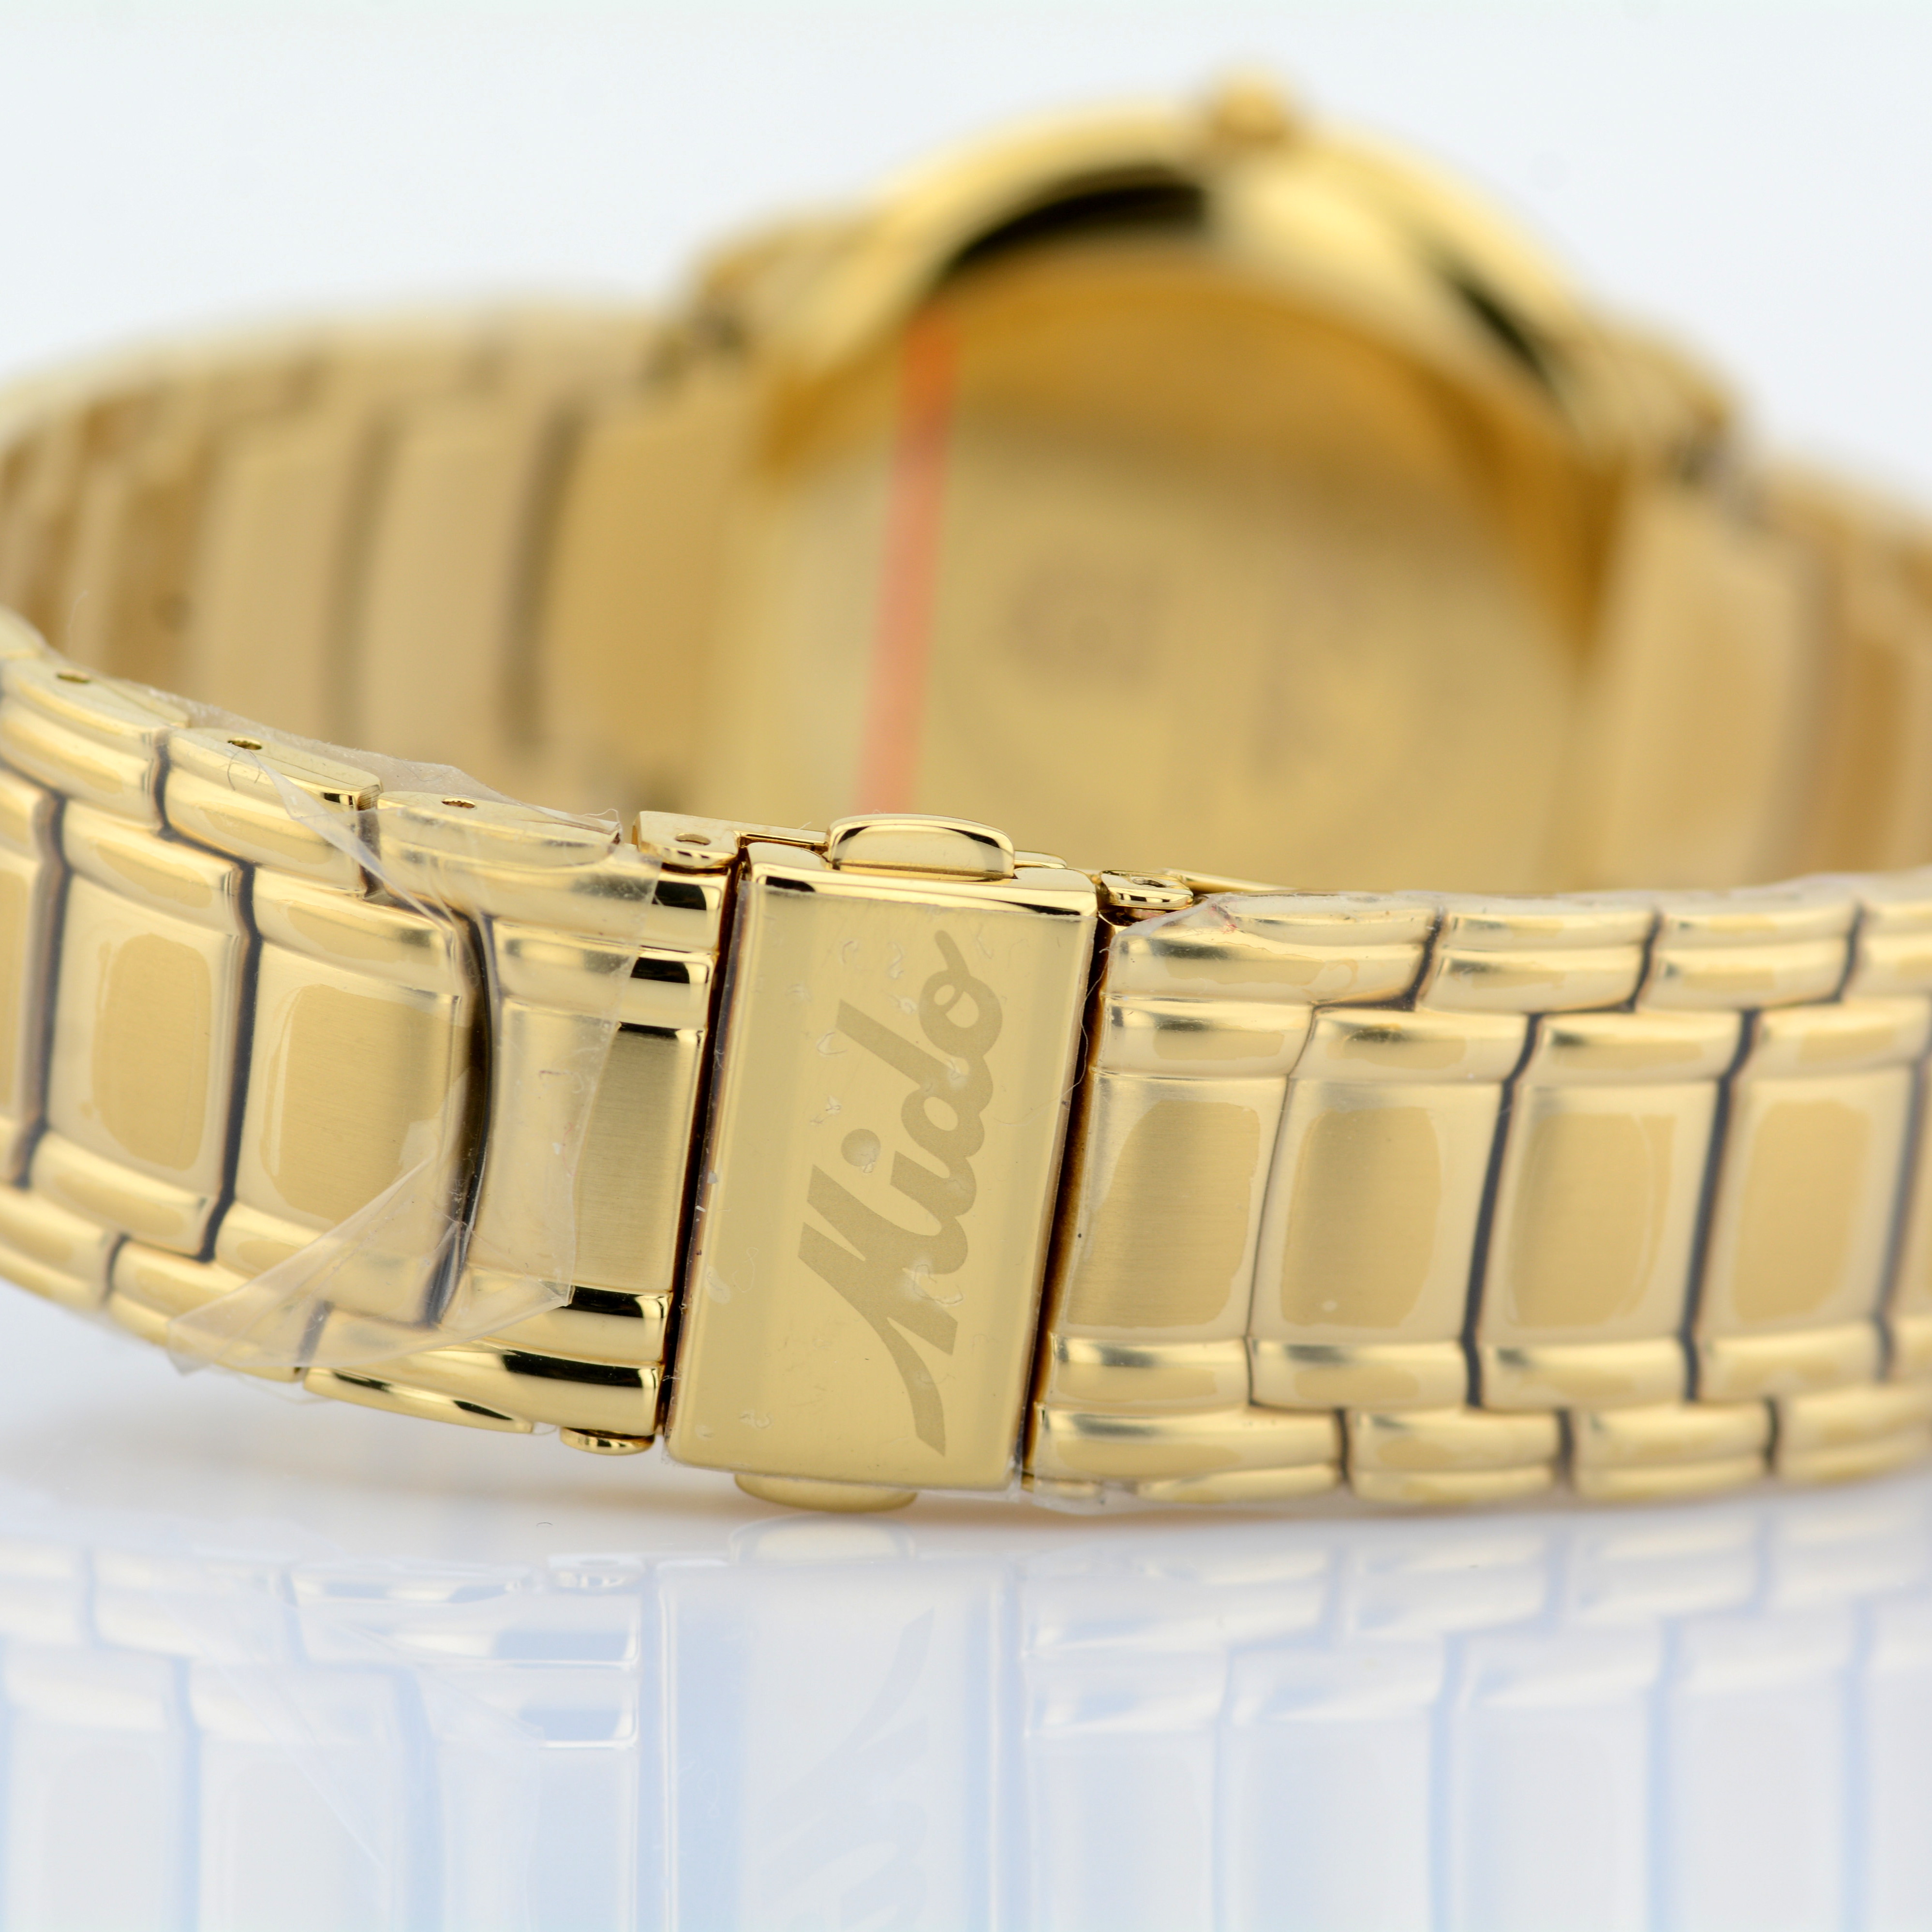 Mido / Ocean Star Automatic - (Unworn) Gentlmen's Gold-plated Wrist Watch - Image 6 of 7